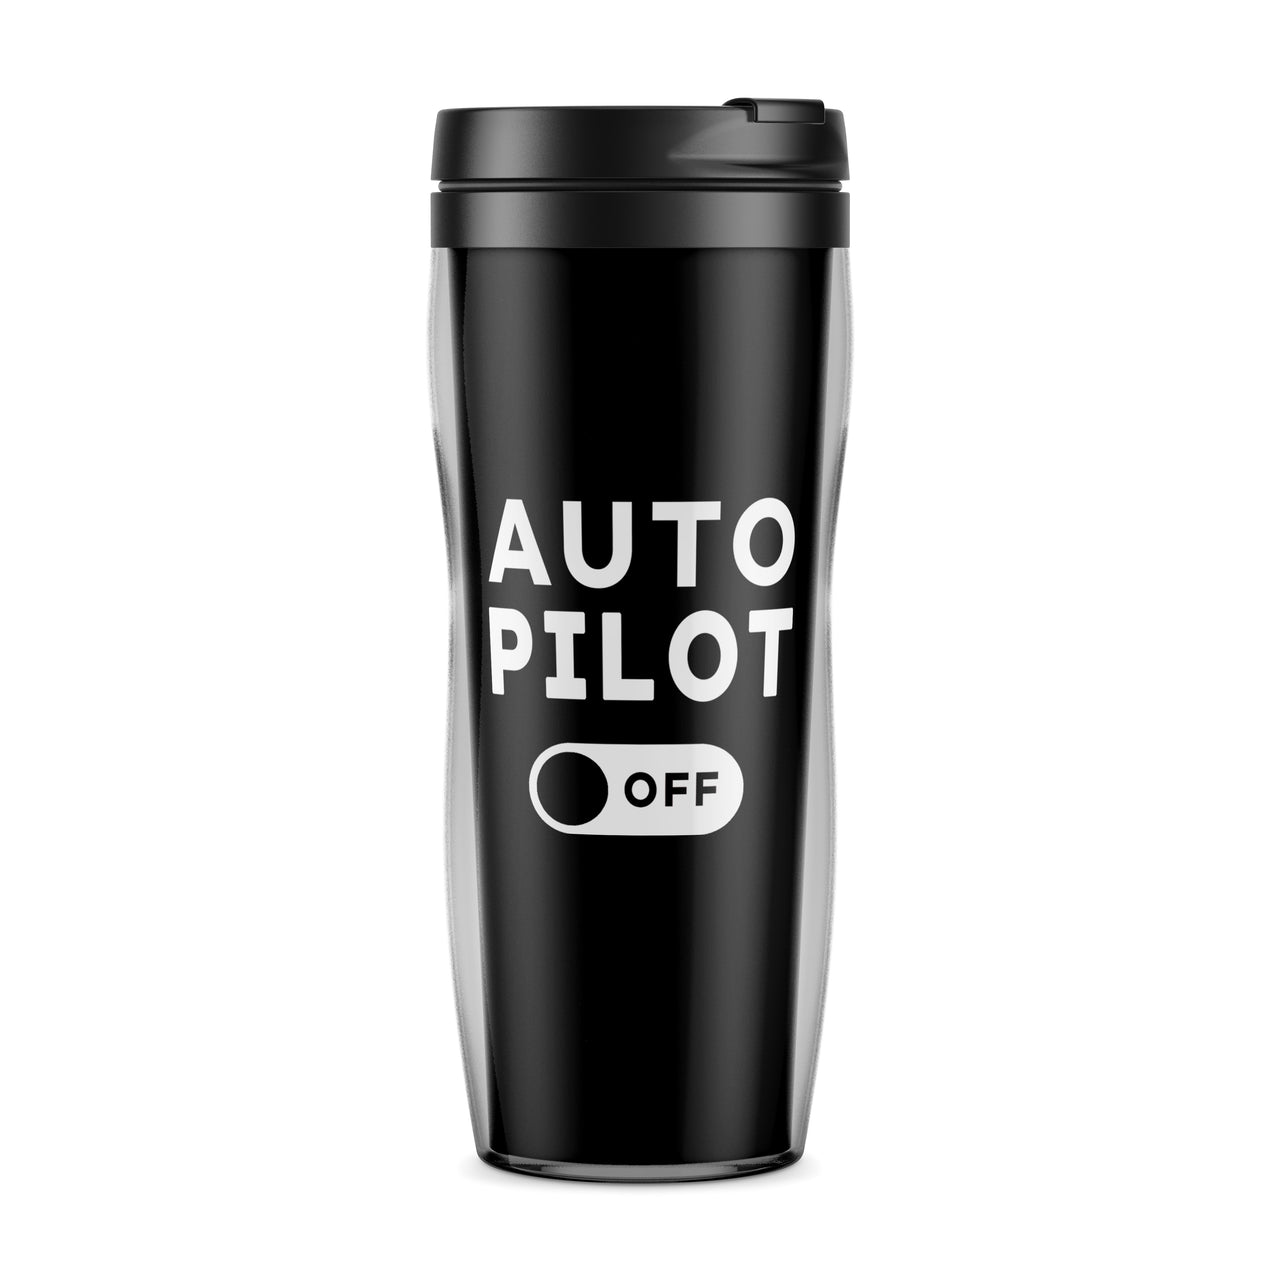 Auto Pilot Off Designed Travel Mugs